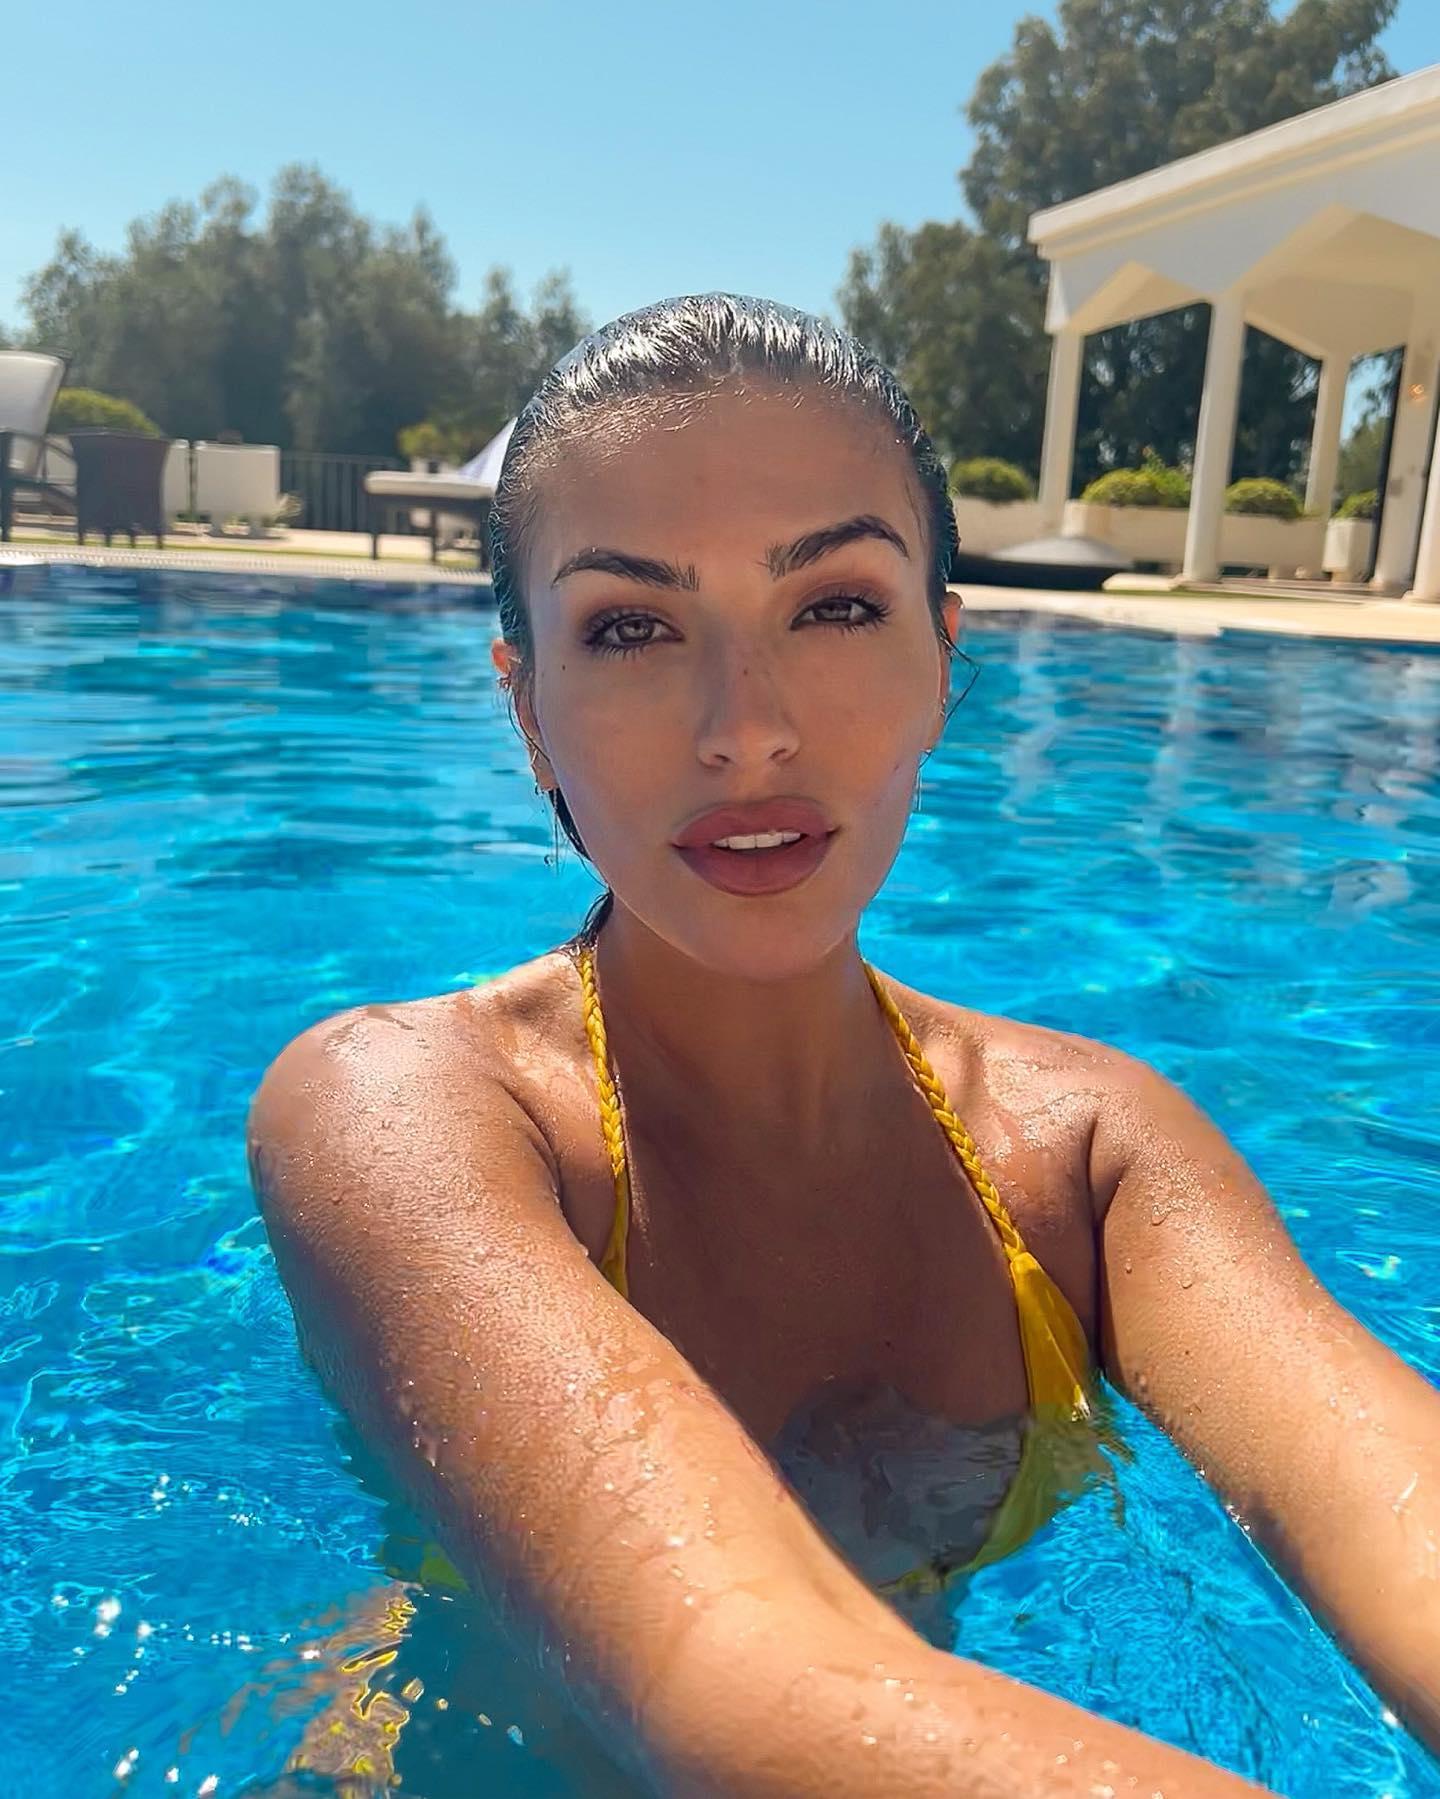 Emily Faye Miller visits a pool party in a yellow bikini